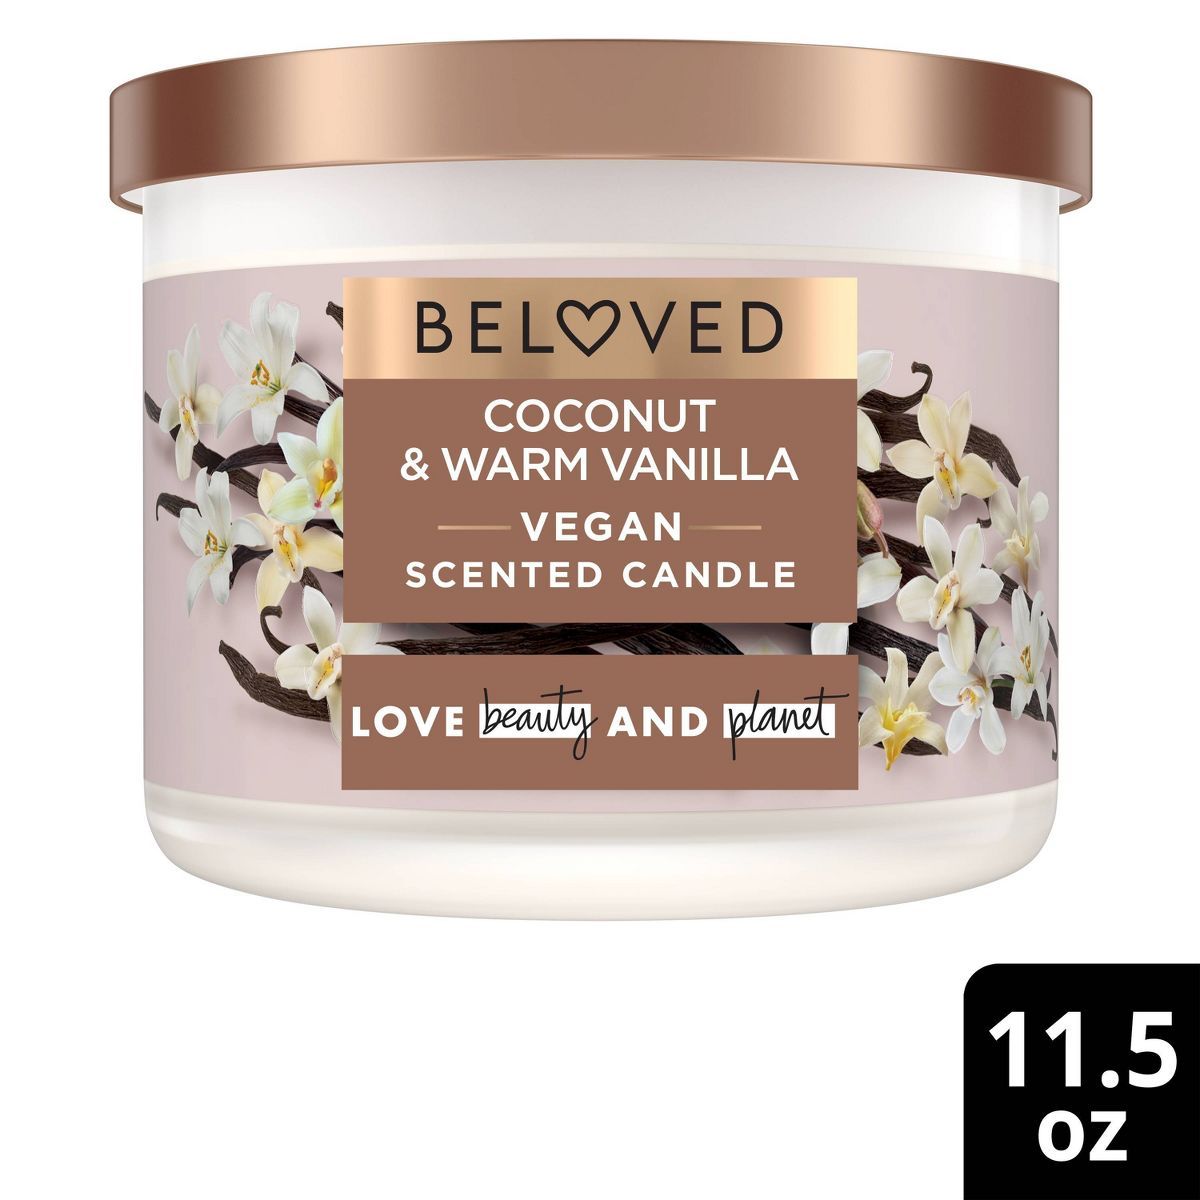 Beloved Coconut & Warm Vanilla 2-Wick Vegan Candle - 11.5oz | Target